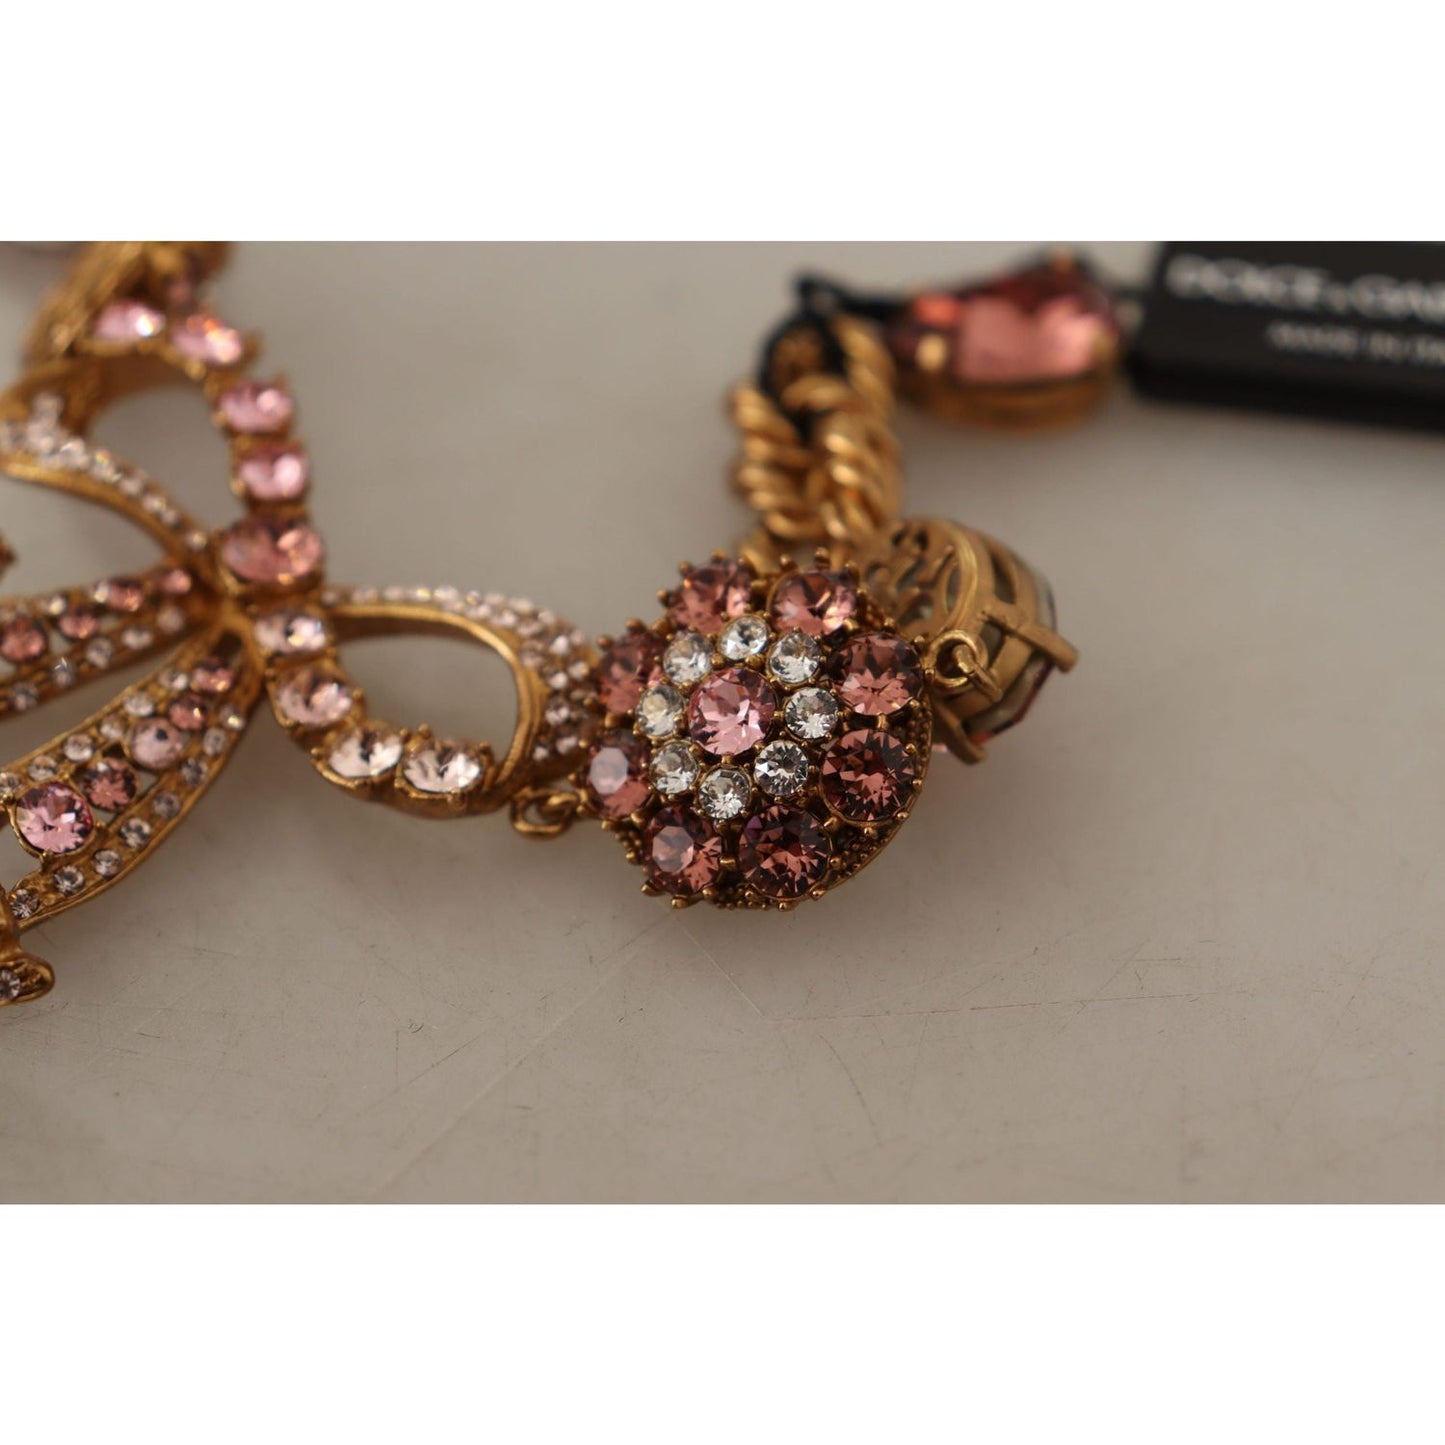 Dolce & Gabbana Elegant Crystal Charm Gold Bracelet gold-brass-chain-baroque-crystal-embellished-bracelet WOMAN BRACELET IMG_8715-scaled-0eb4847e-827.jpg